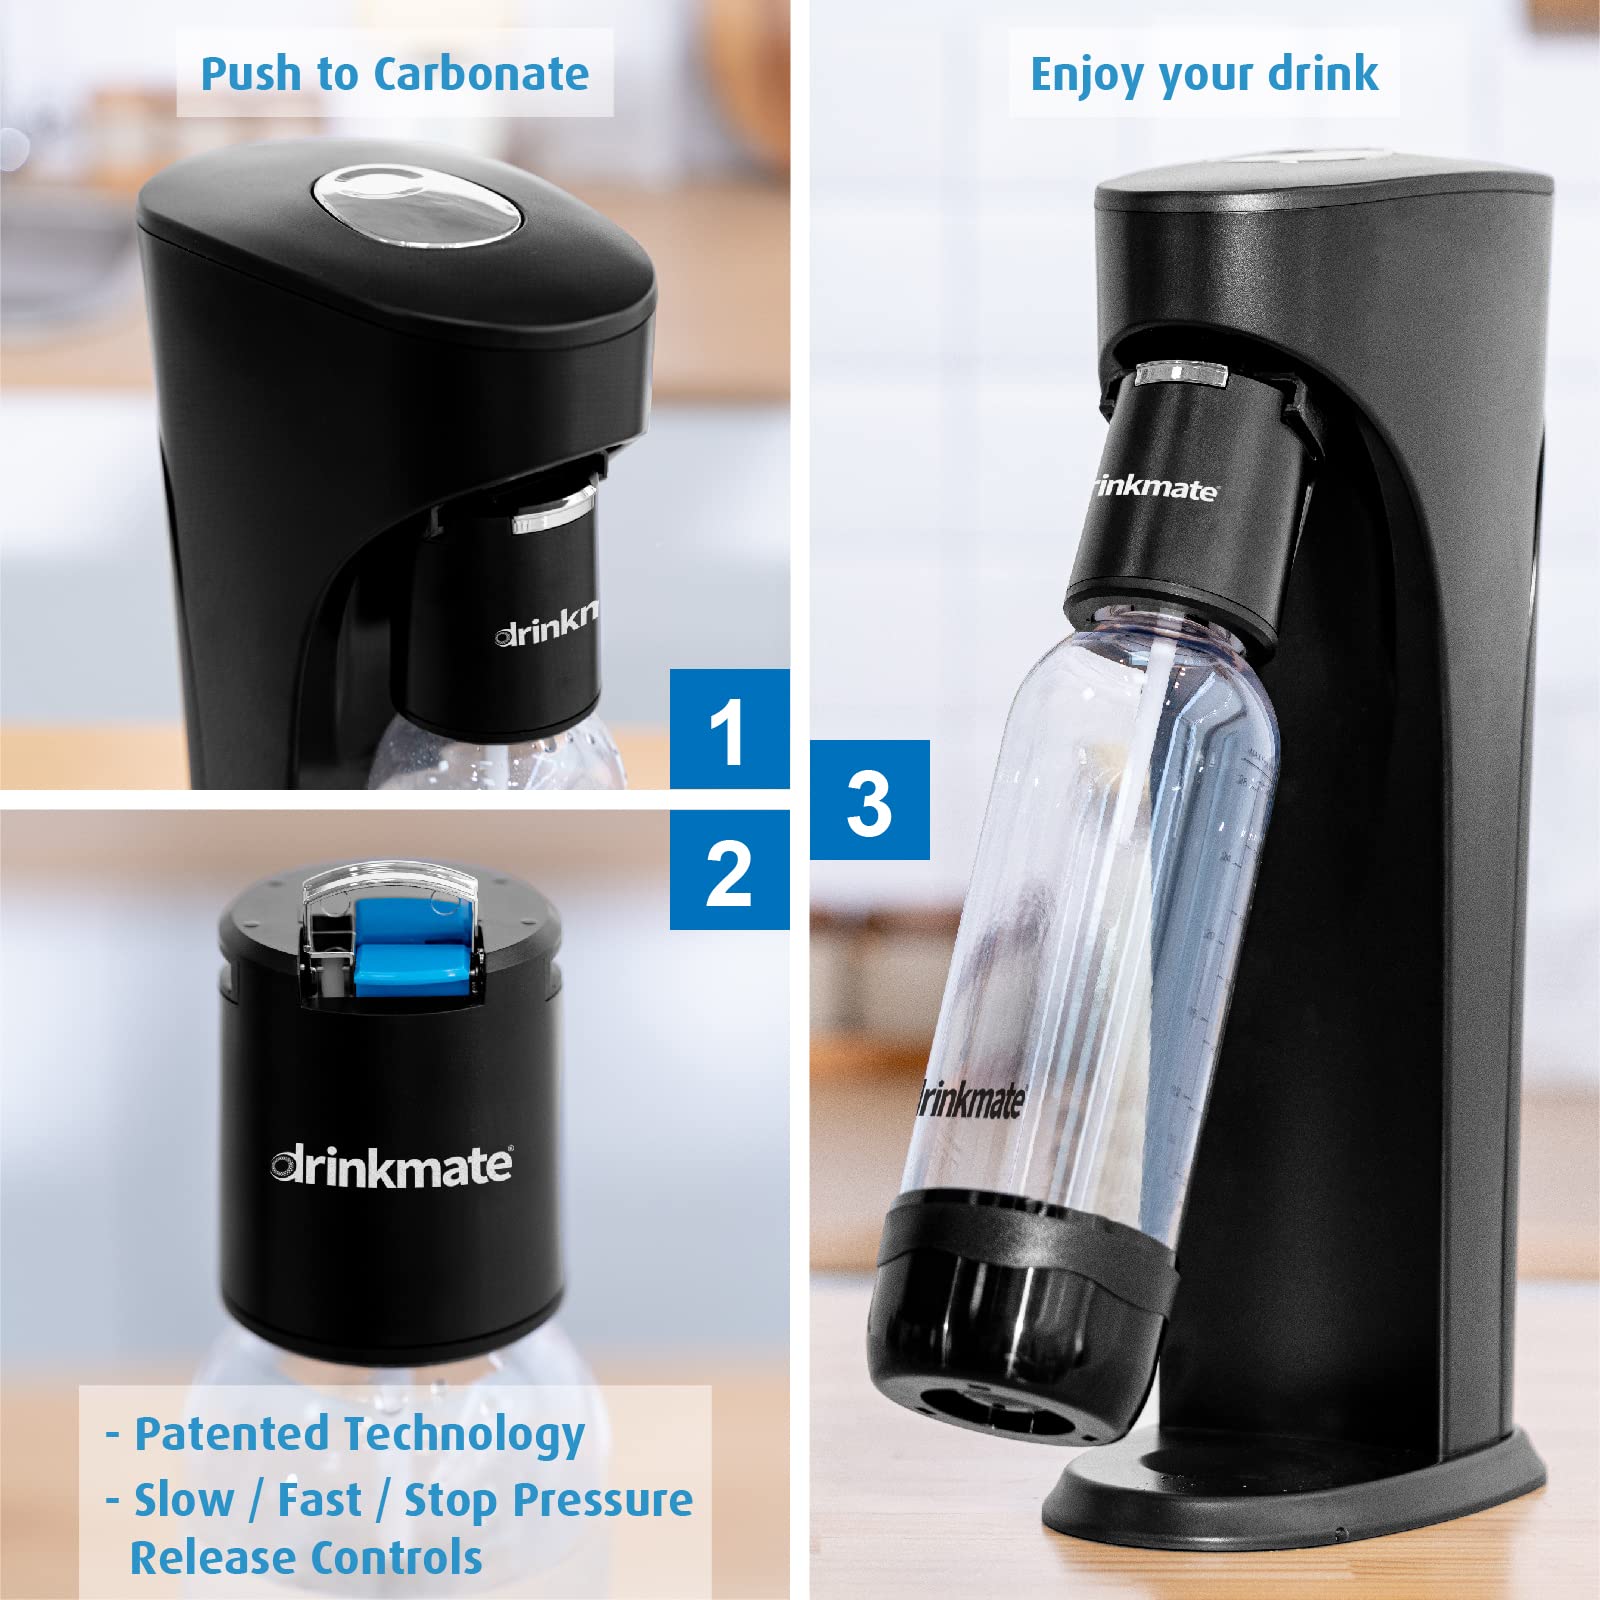 DrinkMate OmniFizz Sparkling Water and Soda Maker, Carbonates Any Drink, with 3 oz CO2 Test Cylinder (Matte Black)